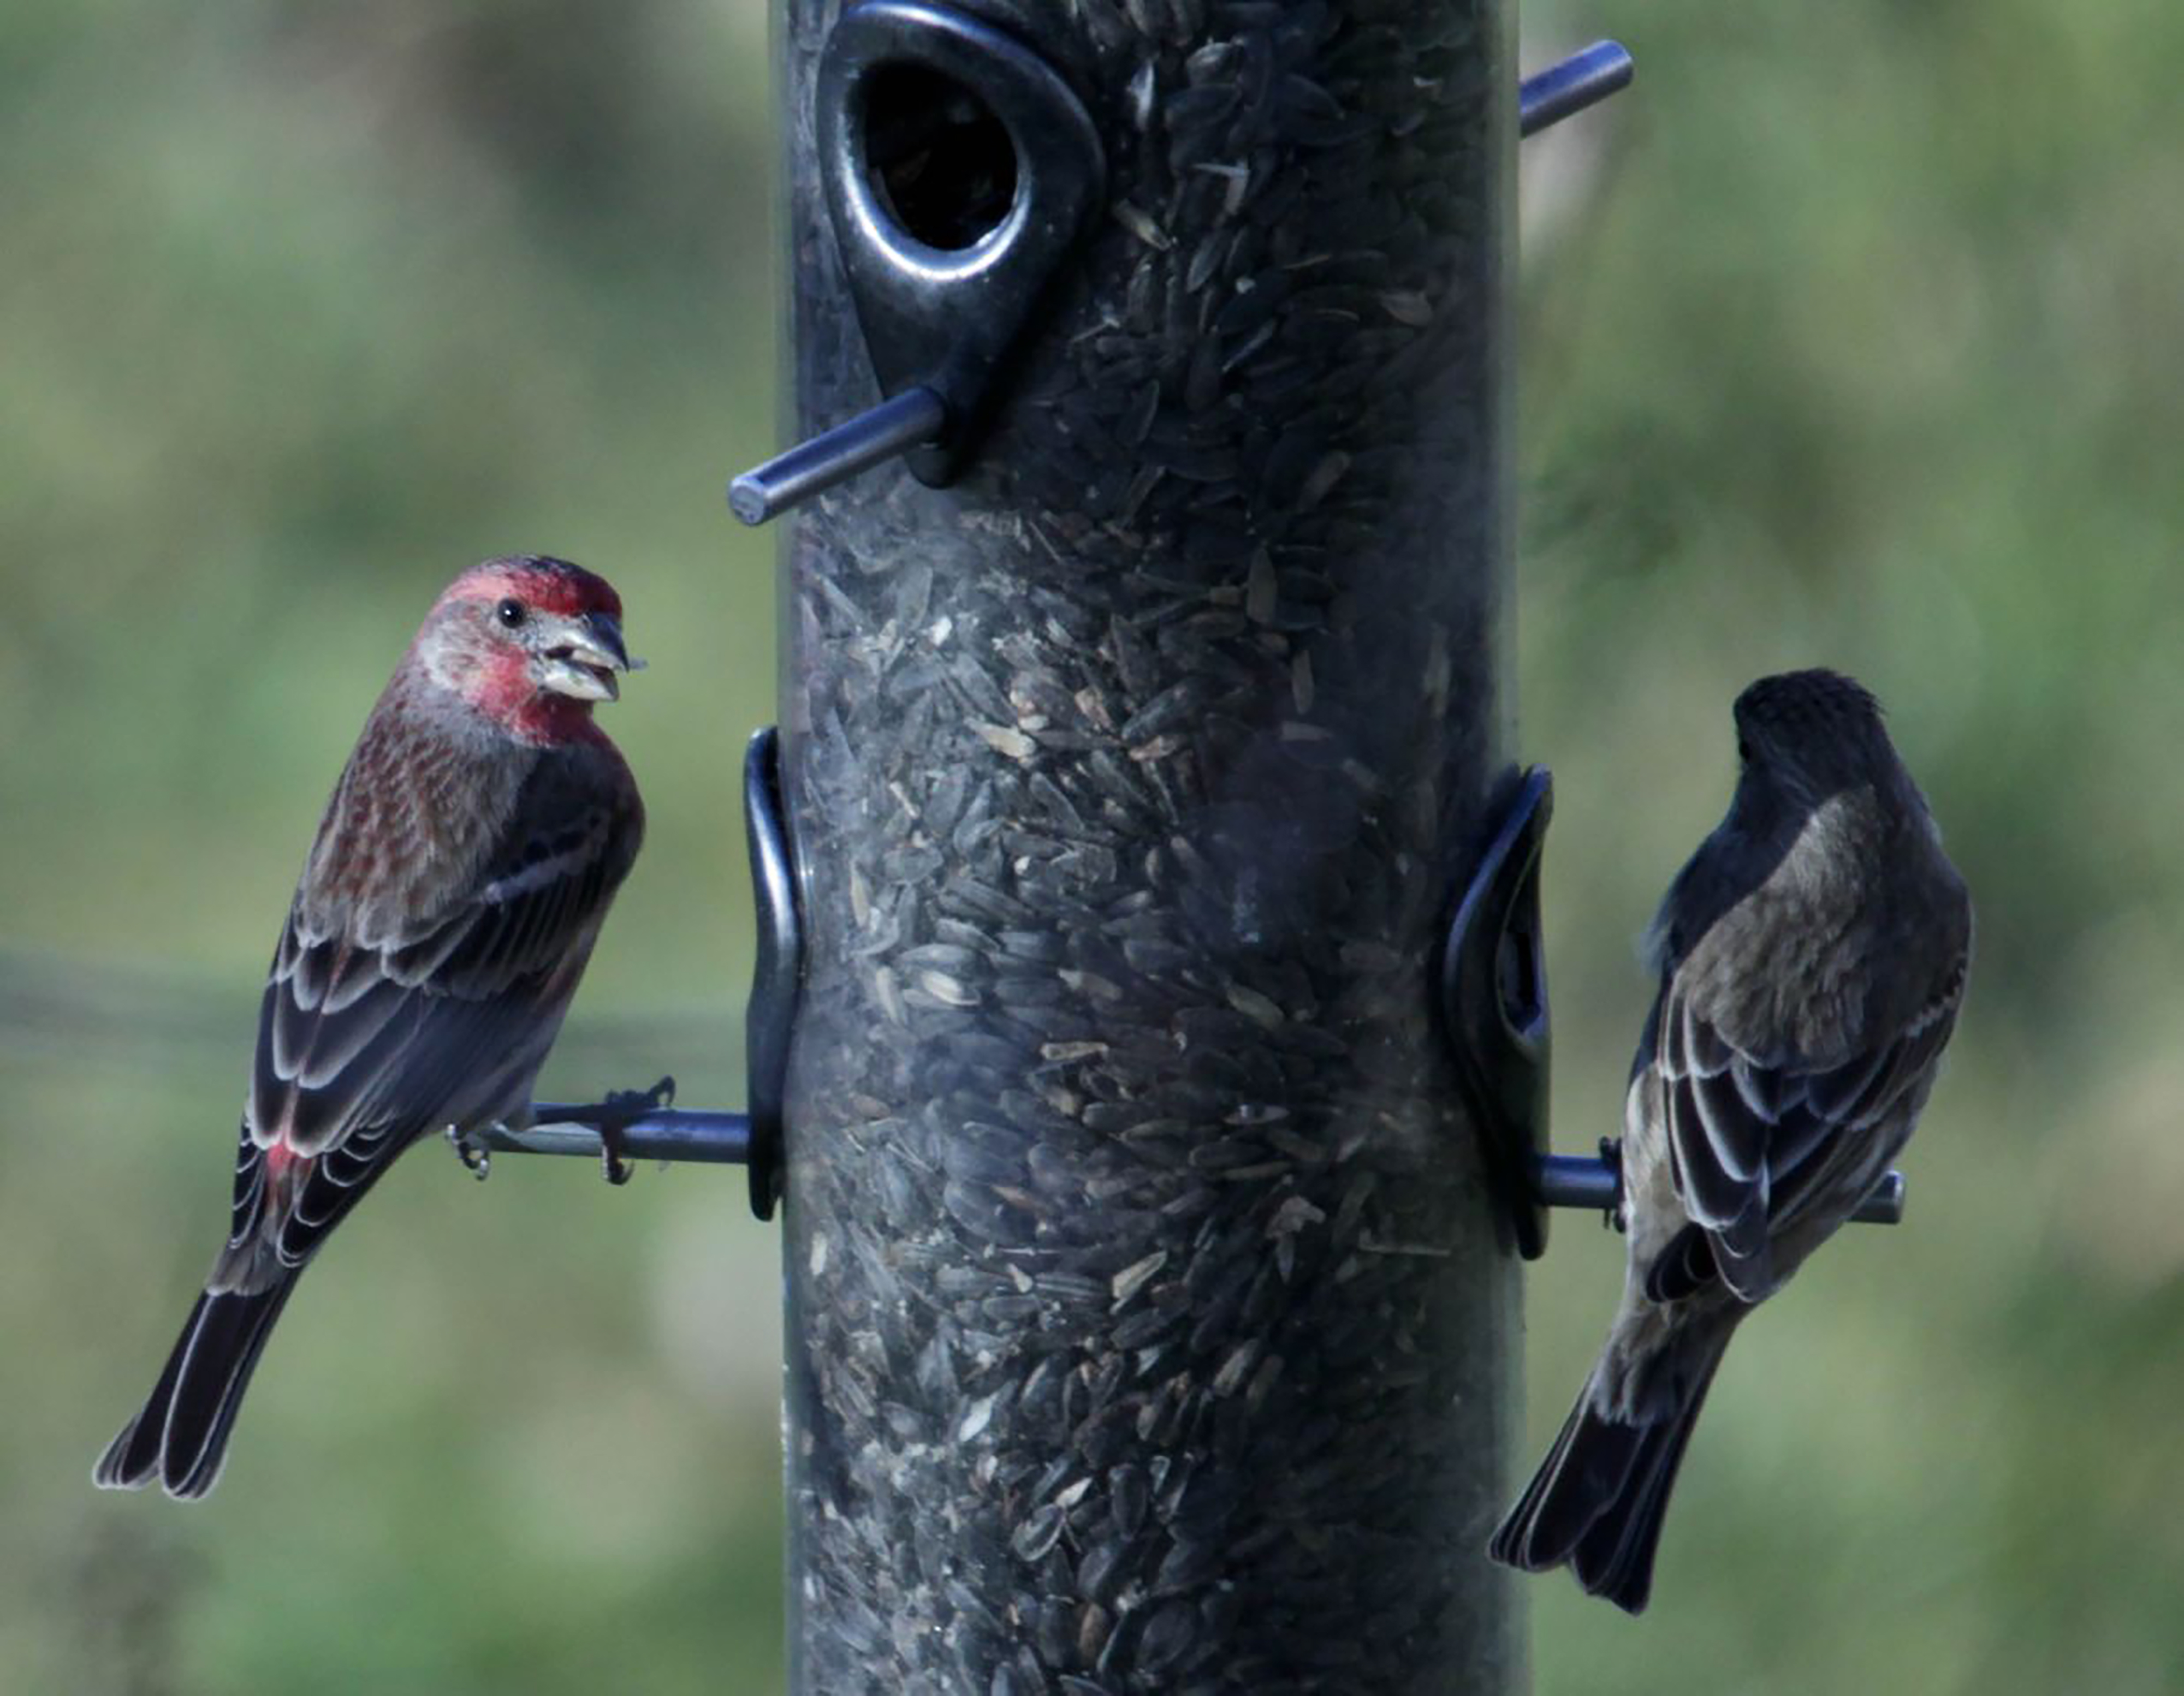 Male finches on bird feeder